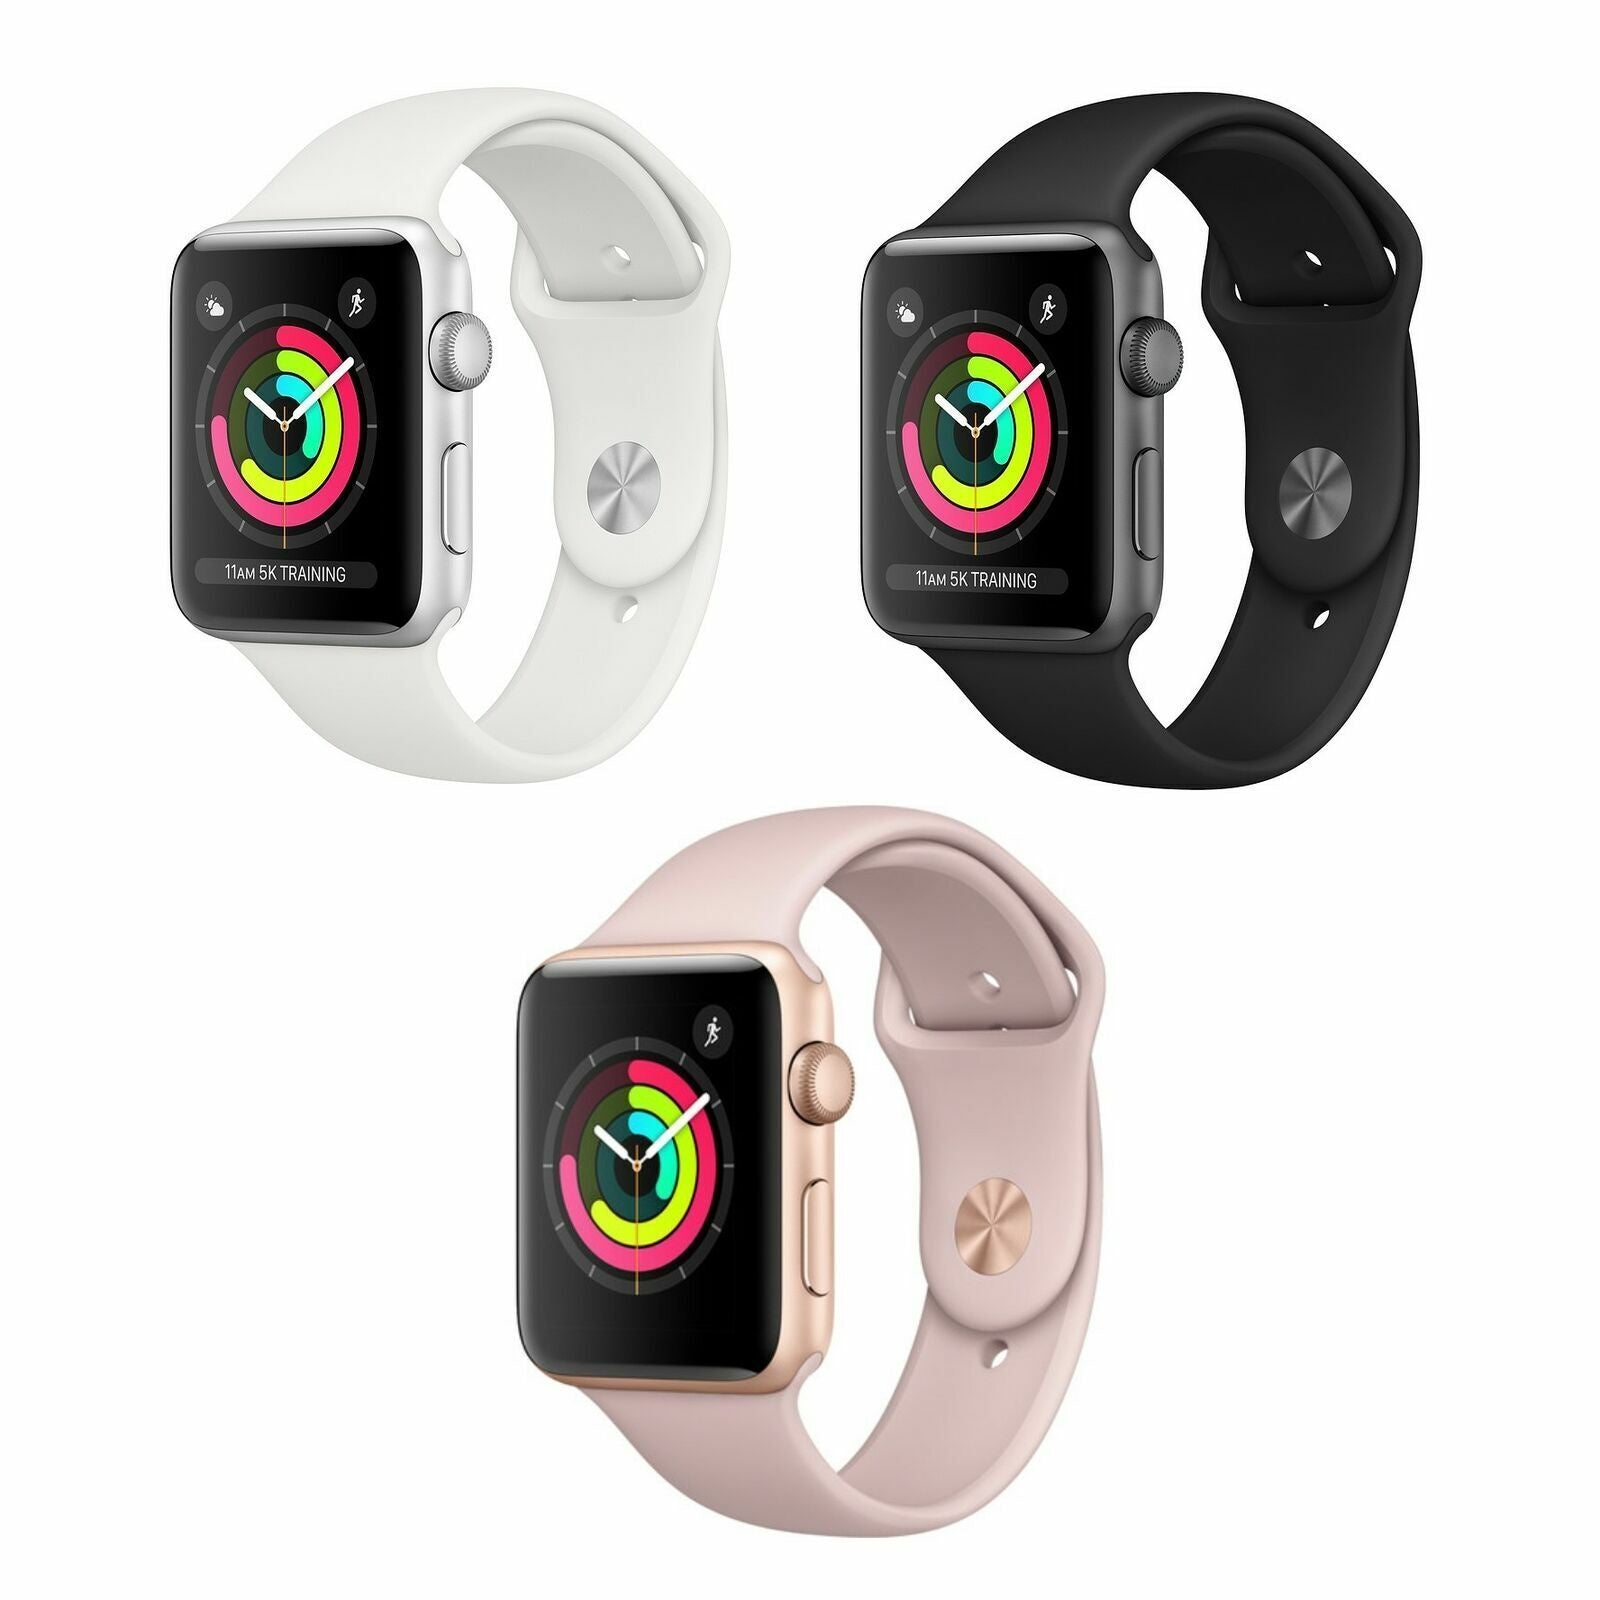 Apple Watch Series 3 | A1860 | 38MM | Cellular